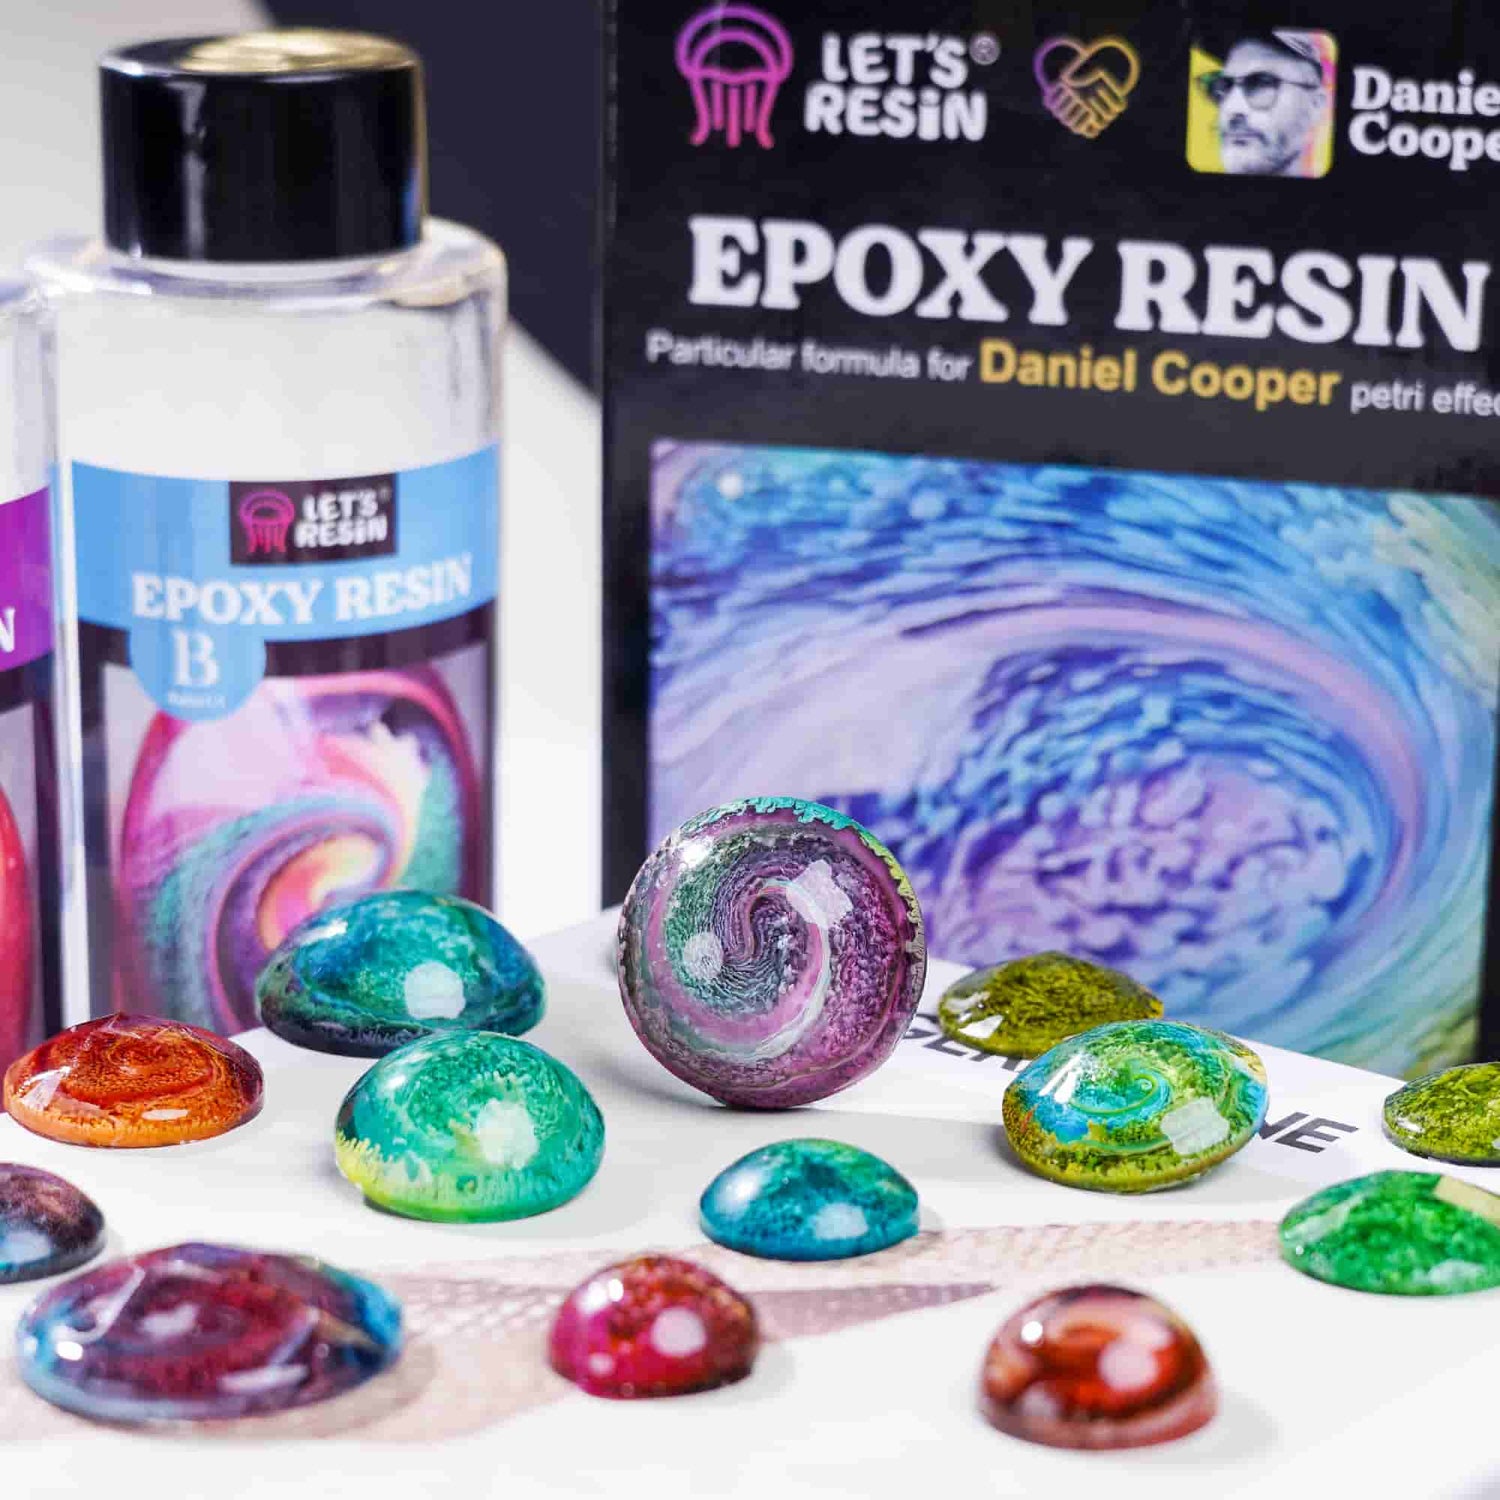  LET'S RESIN Epoxy Resin,Resin Coaster Molds Kit,16oz